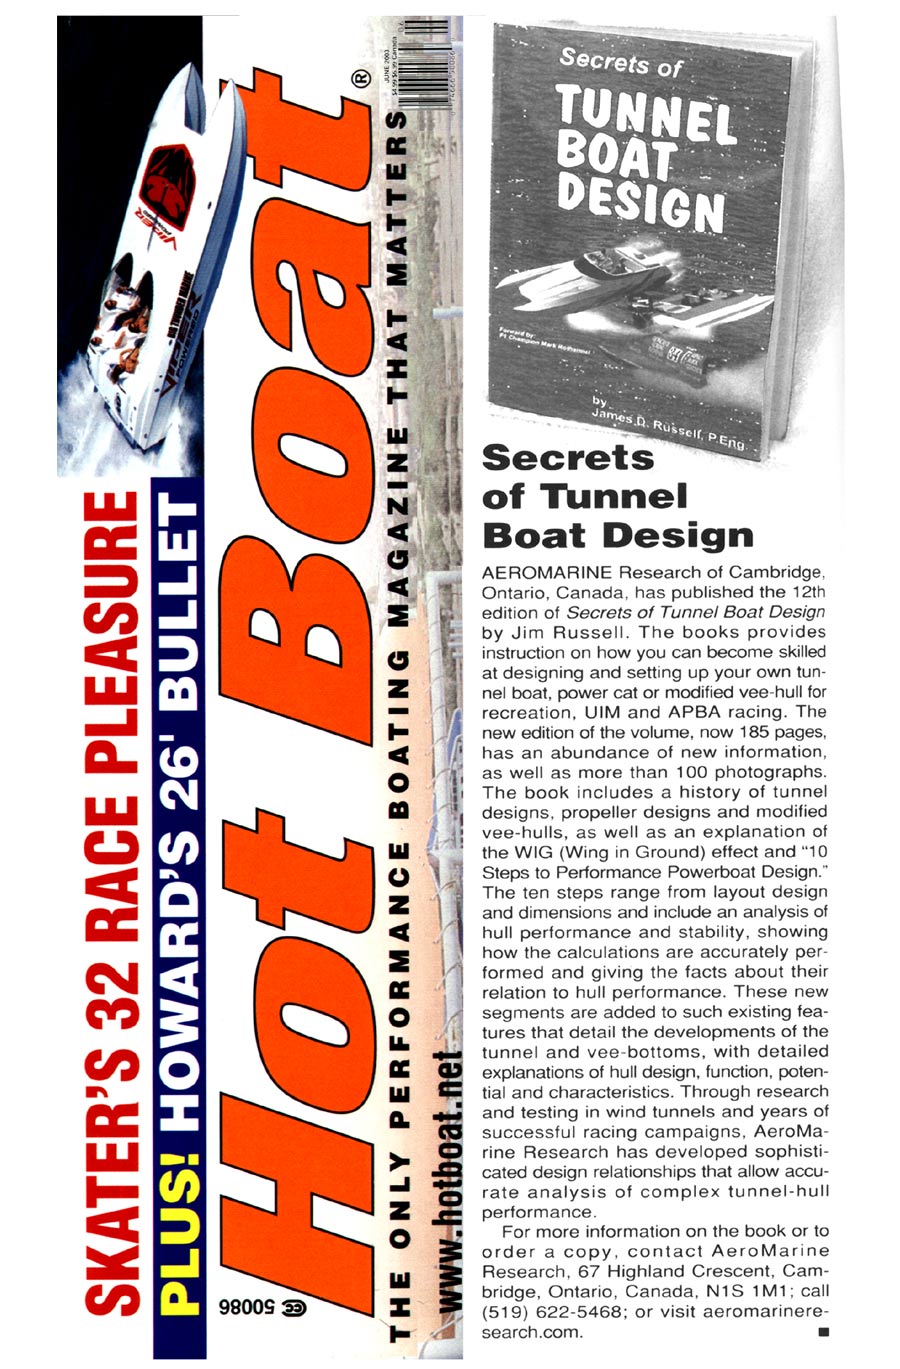 Hot Boat June 2003